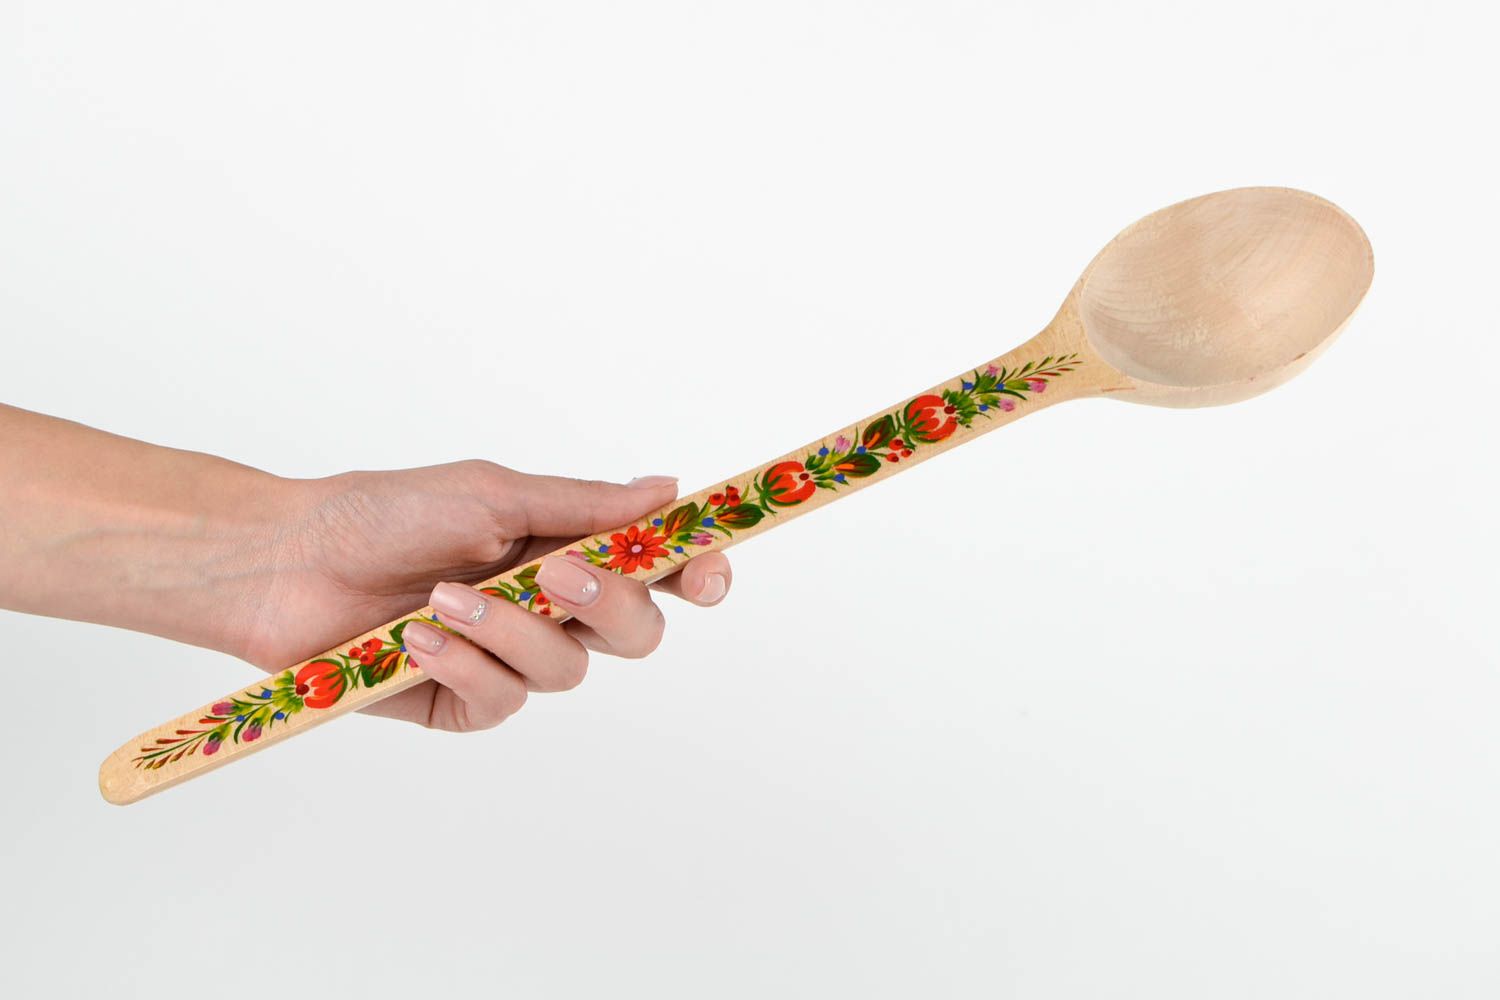 Handmade spoon designer spoon for kitchen decor ideas wooden spoon gift ideas photo 2